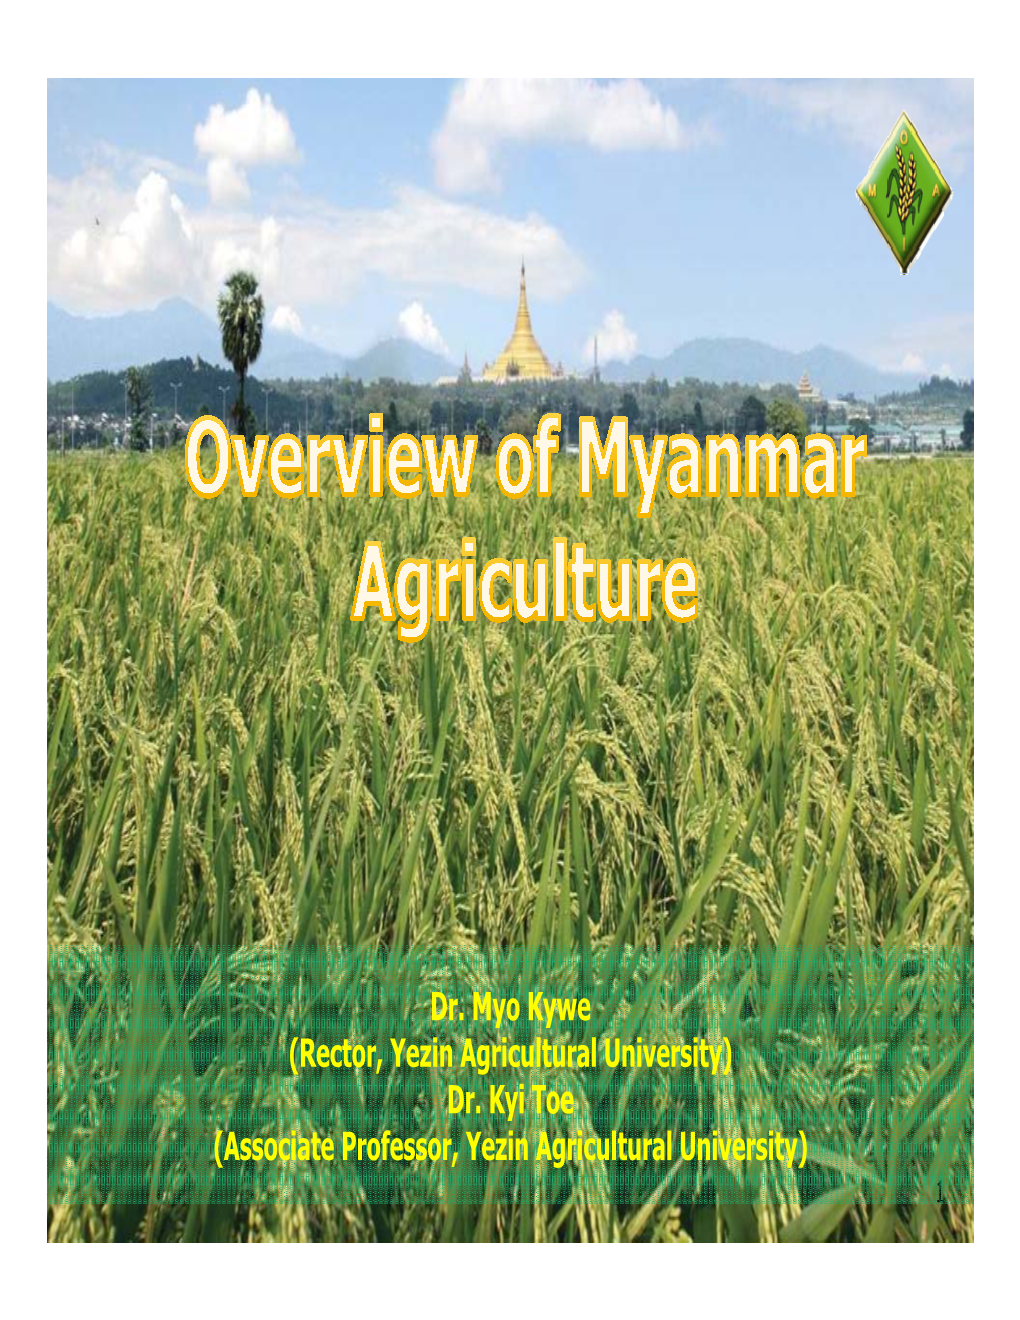 Dr. Myo Kywe (Rector, Yezin Agricultural University) Dr. Kyi